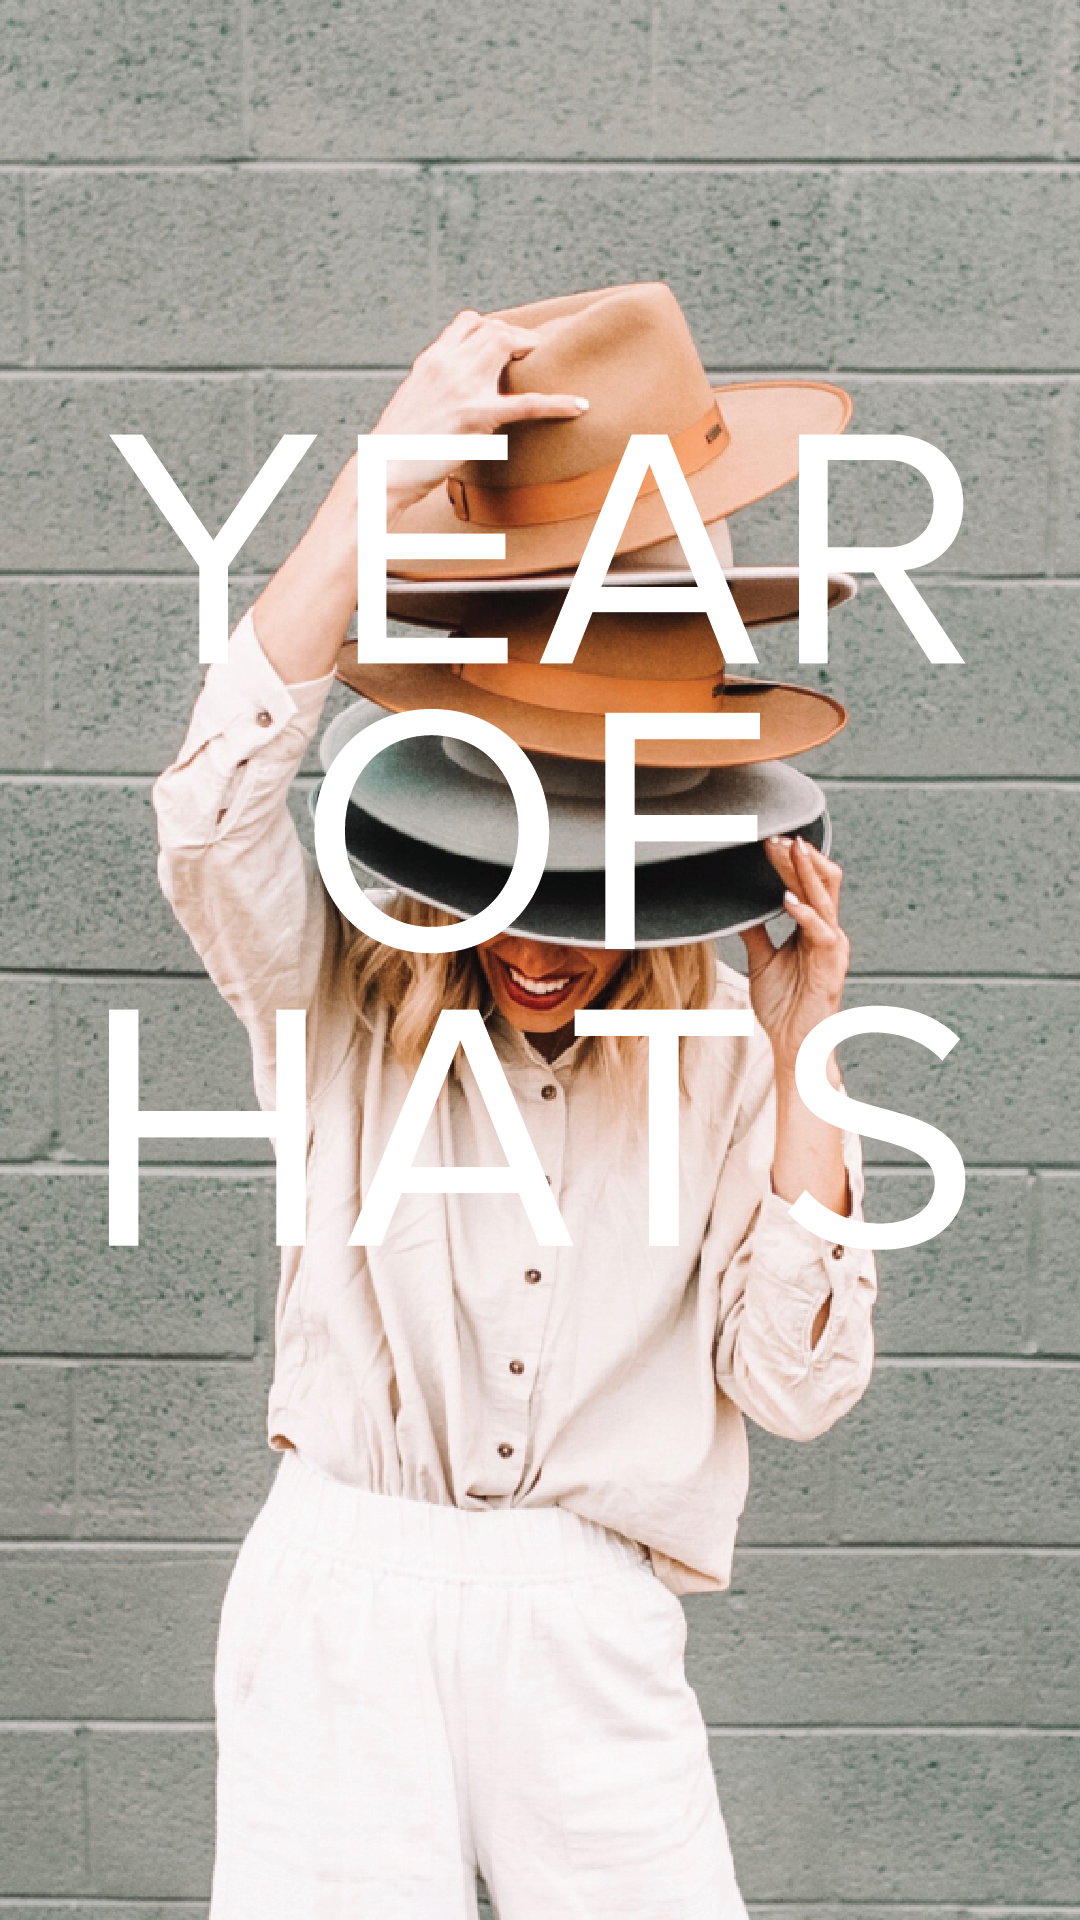 Year of hats portrait